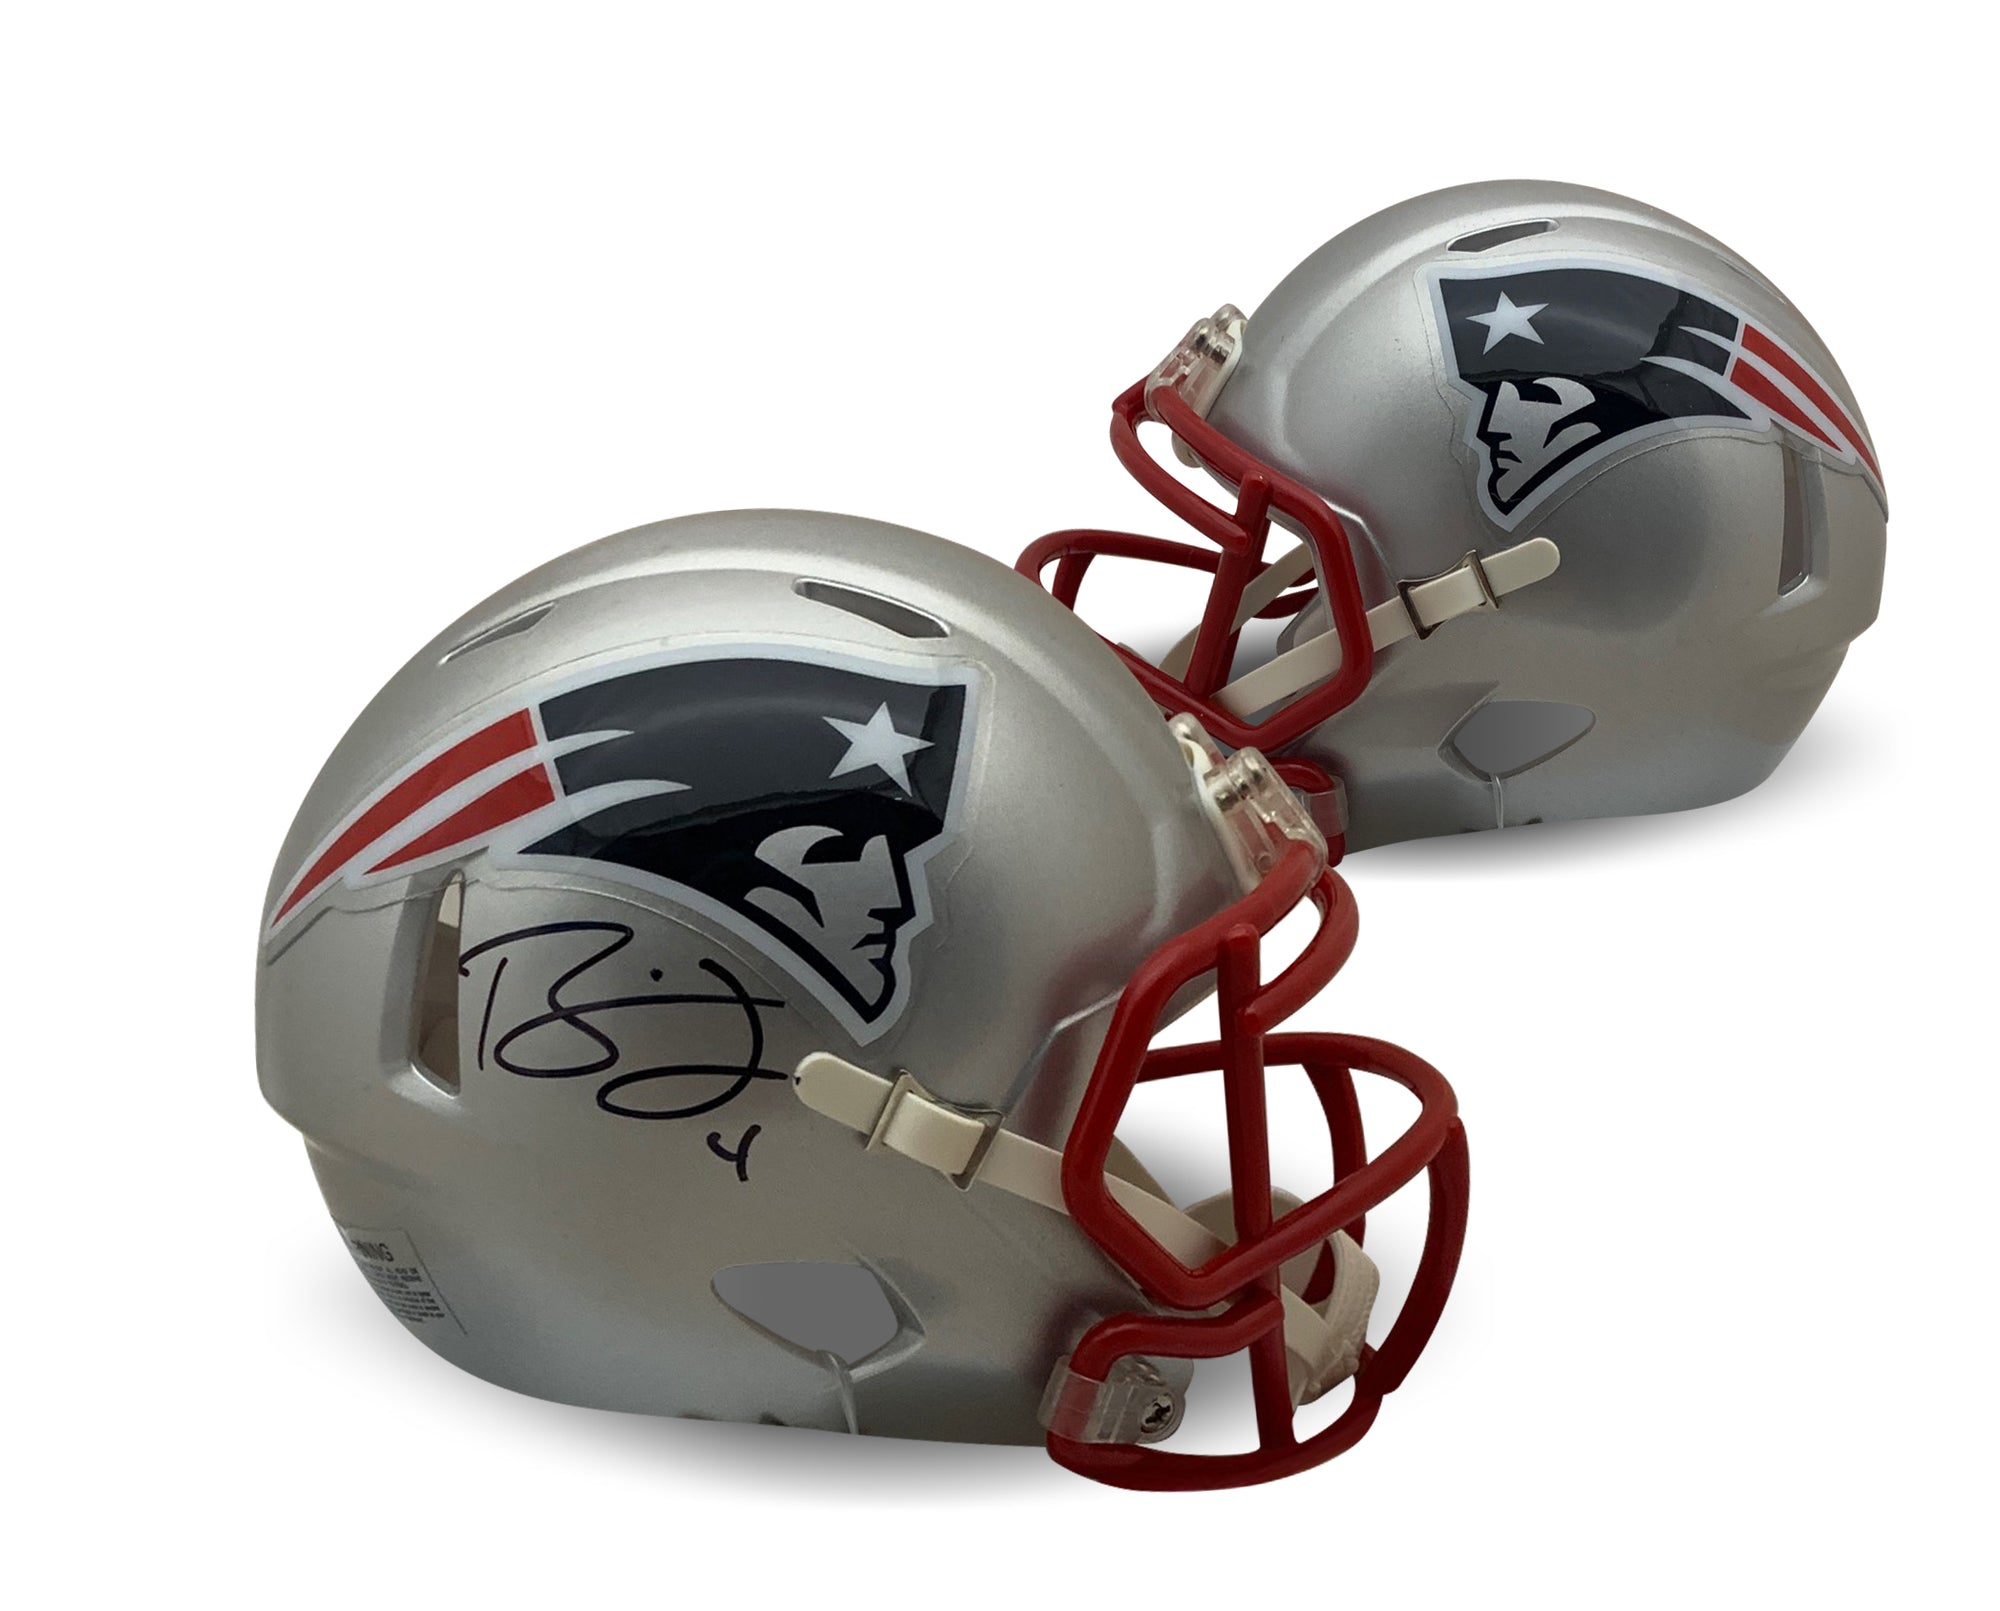 Bailey Zappe Autographed New England Patriots Signed Football Mini Helmet JSA COA-Powers Sports Memorabilia